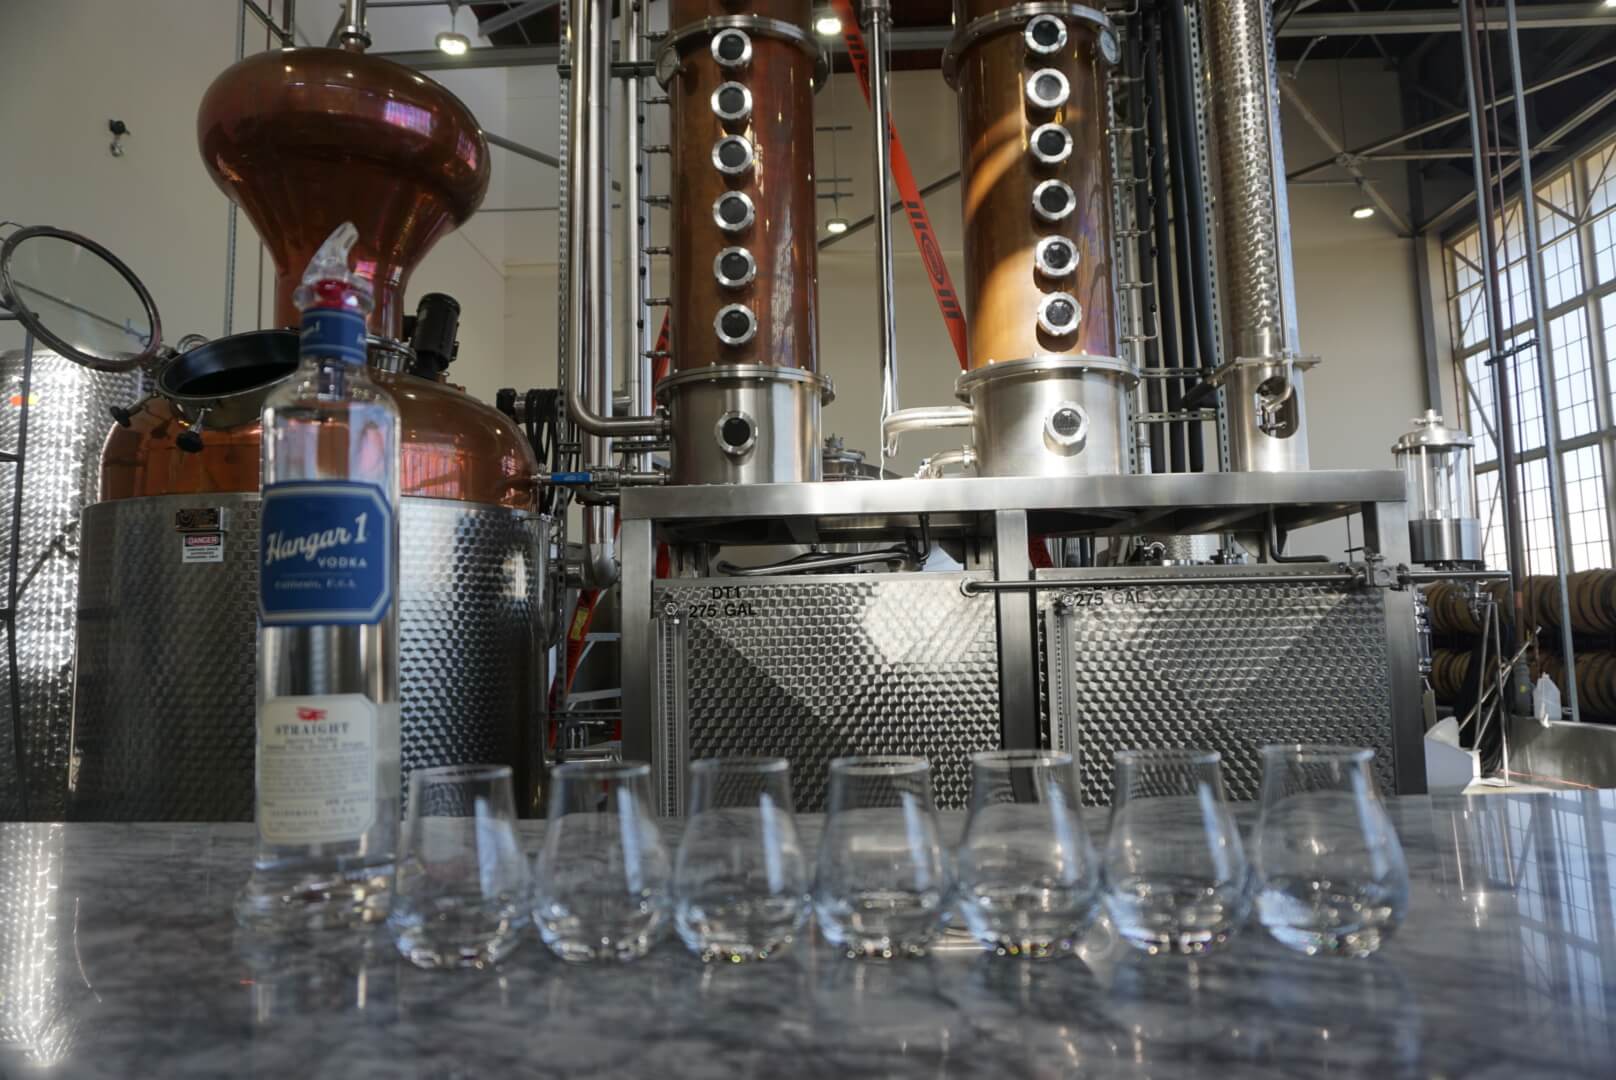 Hangar One Vodka Distillery